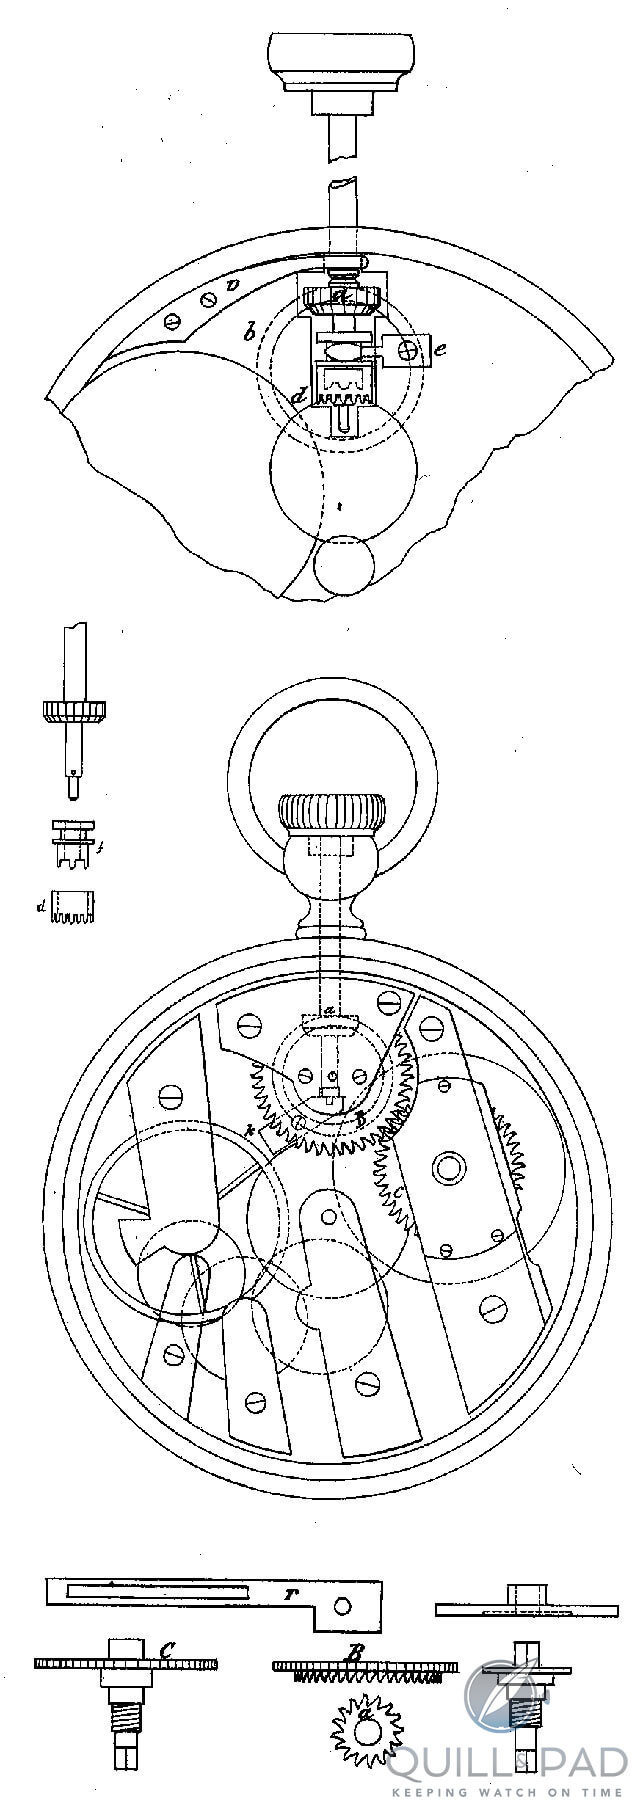 Patent for JA Philippe's keyless winding system